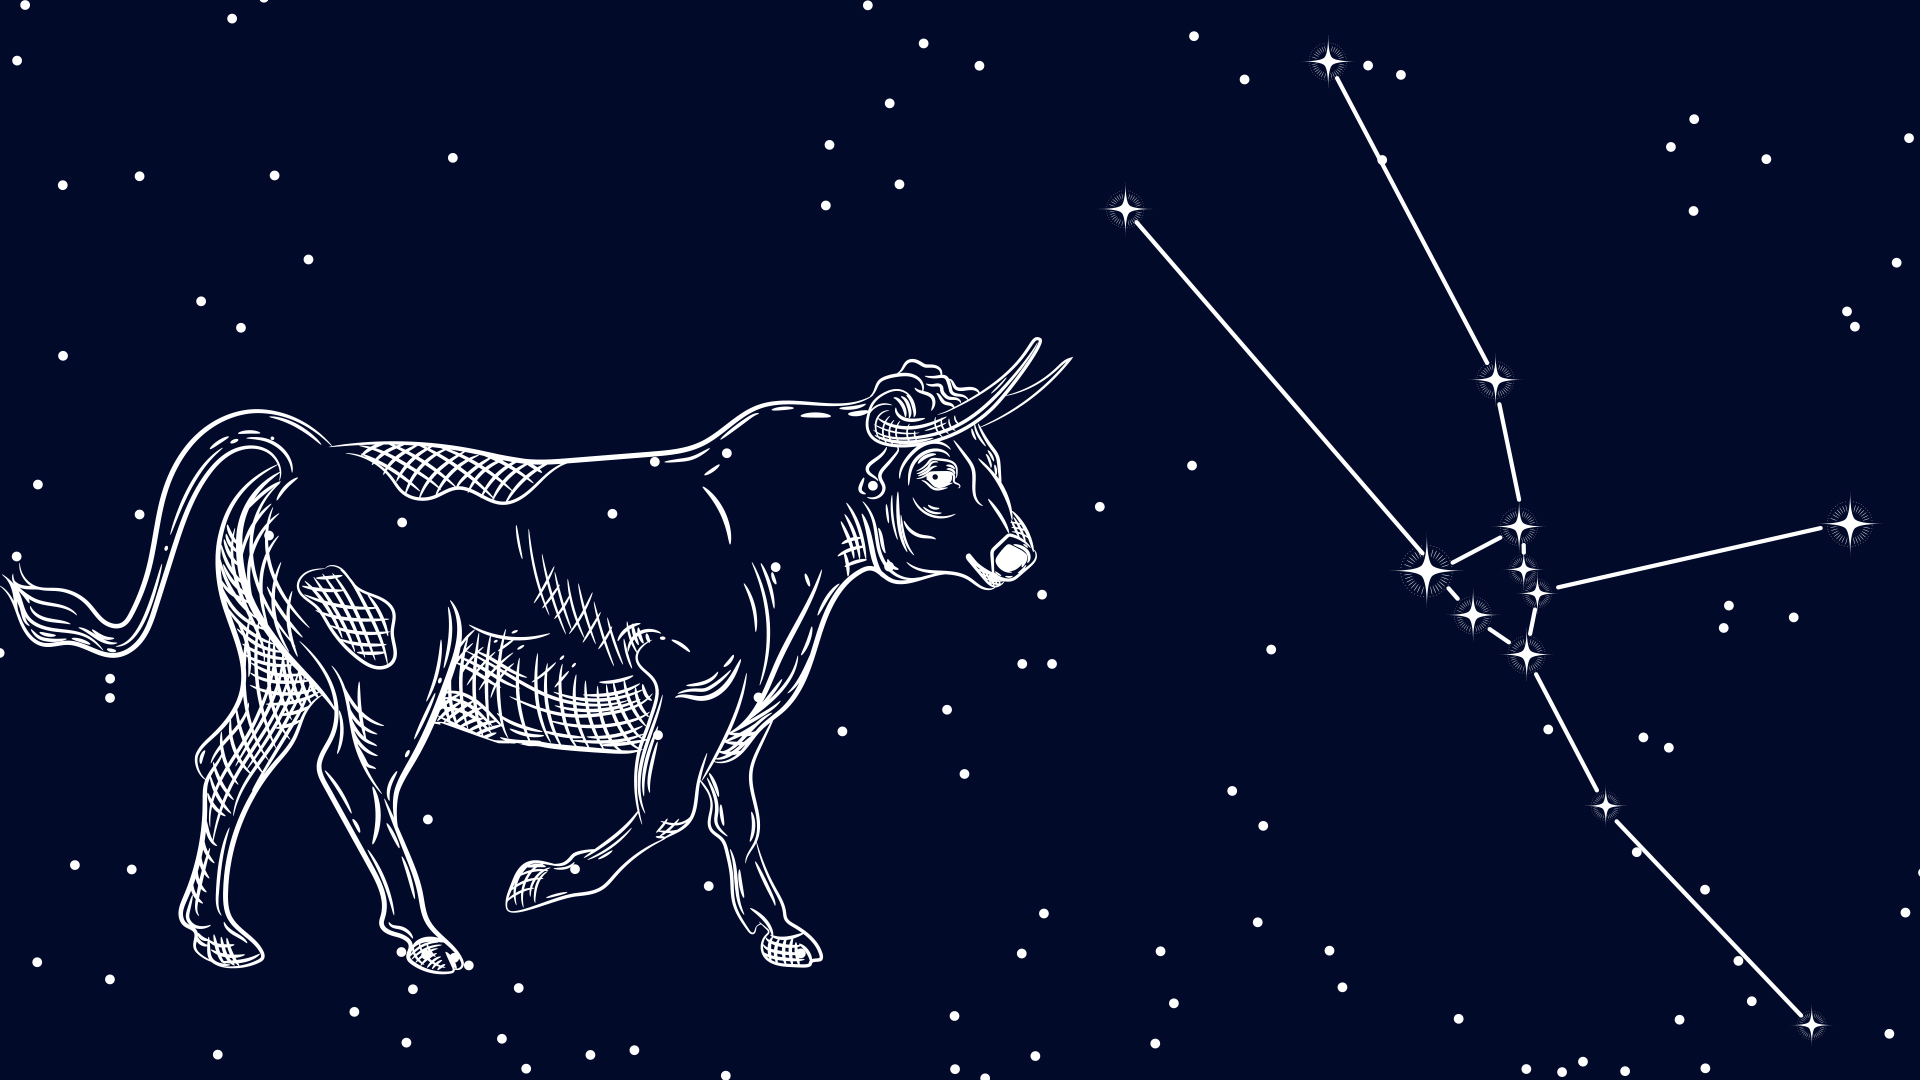 Taurus and the constellation of Taurus